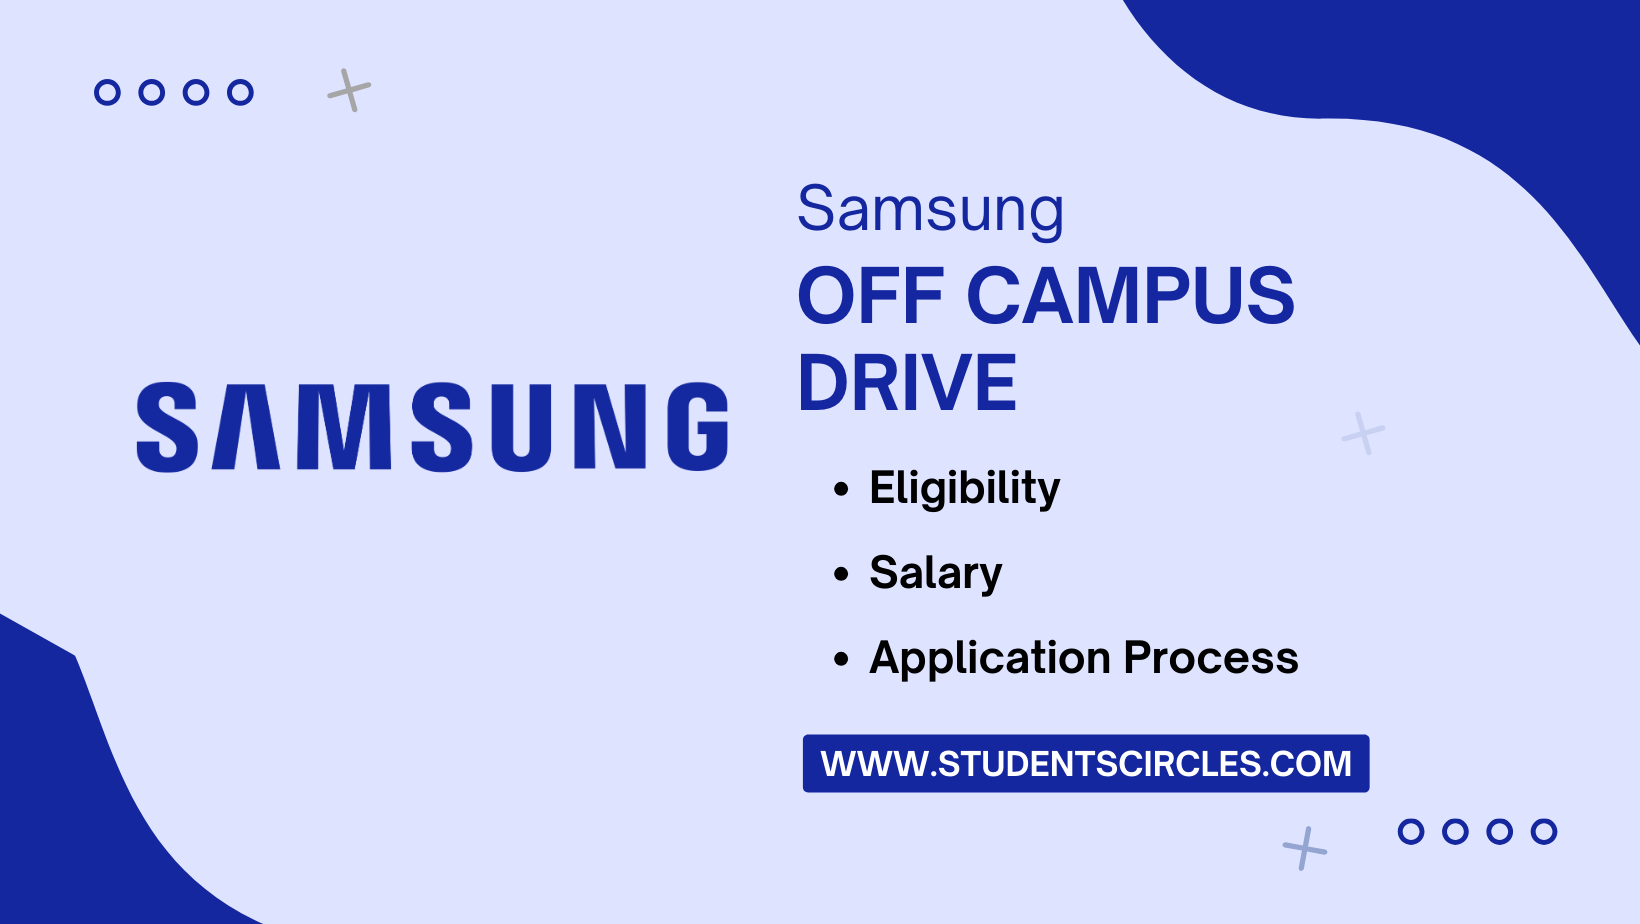 Samsung Off Campus Drive